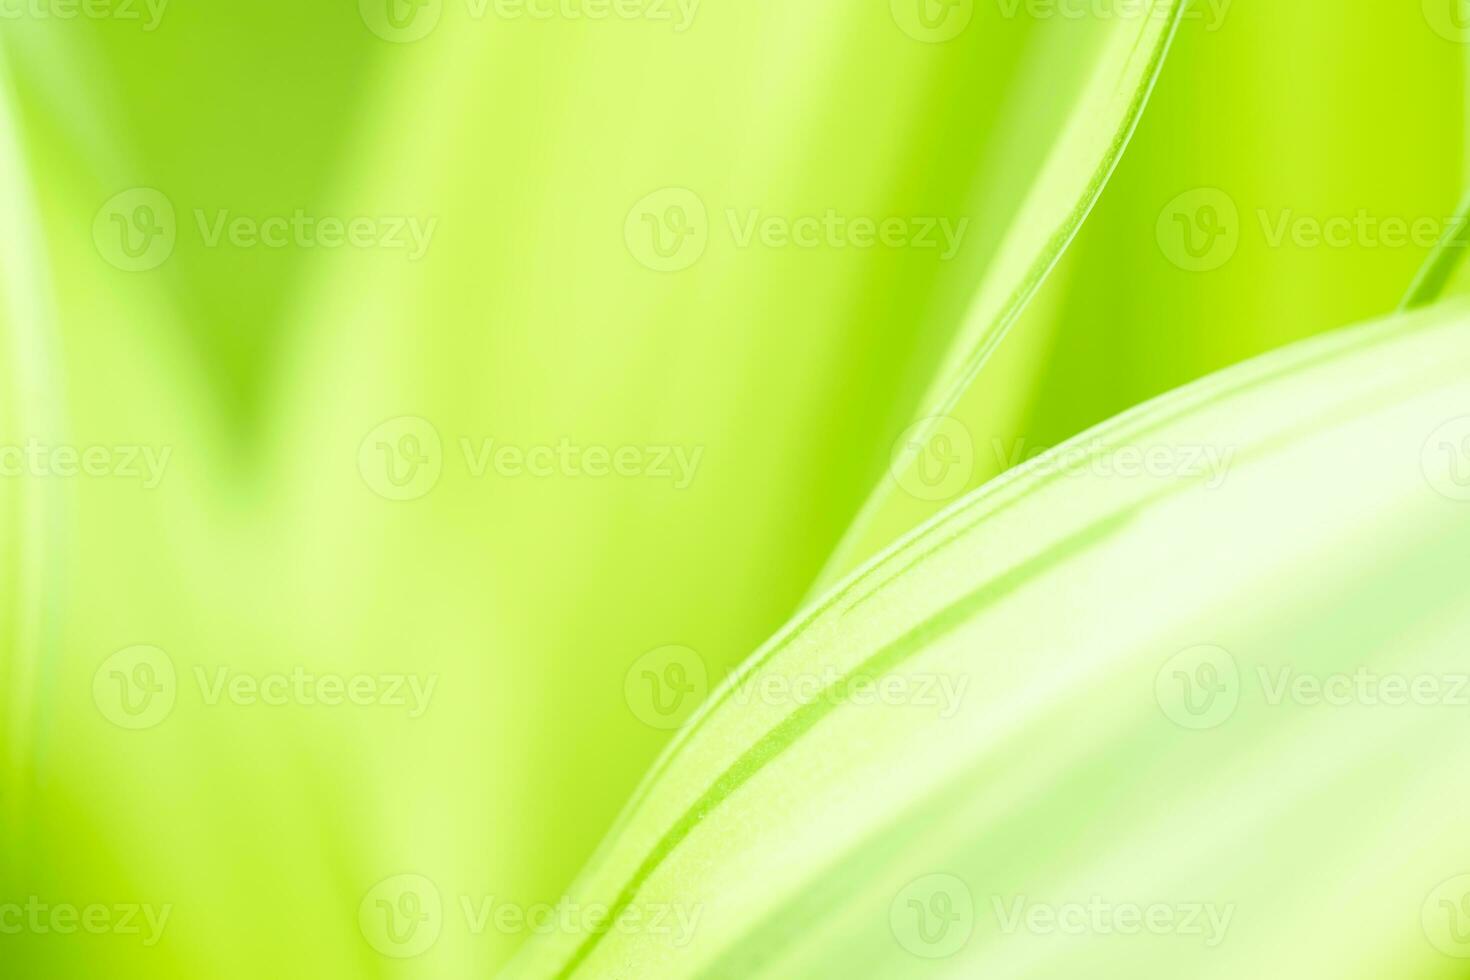 degradado naturaleza ver de verde hoja en borroso verdor antecedentes en jardín con Copiar espacio utilizando como antecedentes natural verde plantas paisaje, ecología, Fresco fondo de pantalla foto